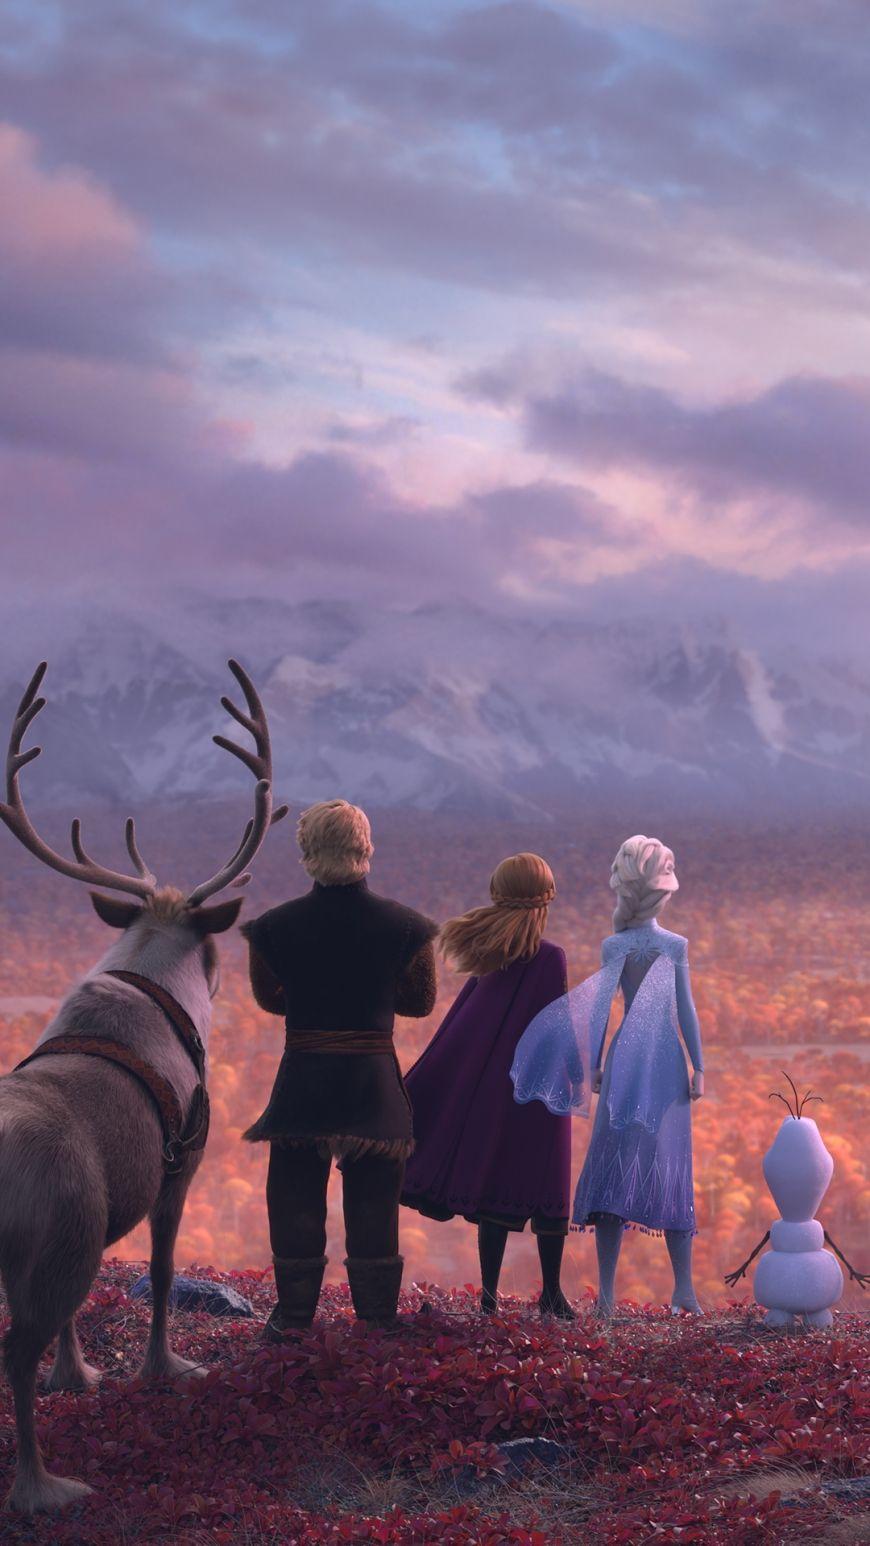 Disney Frozen 2 mobile phone wallpaper. Frozen